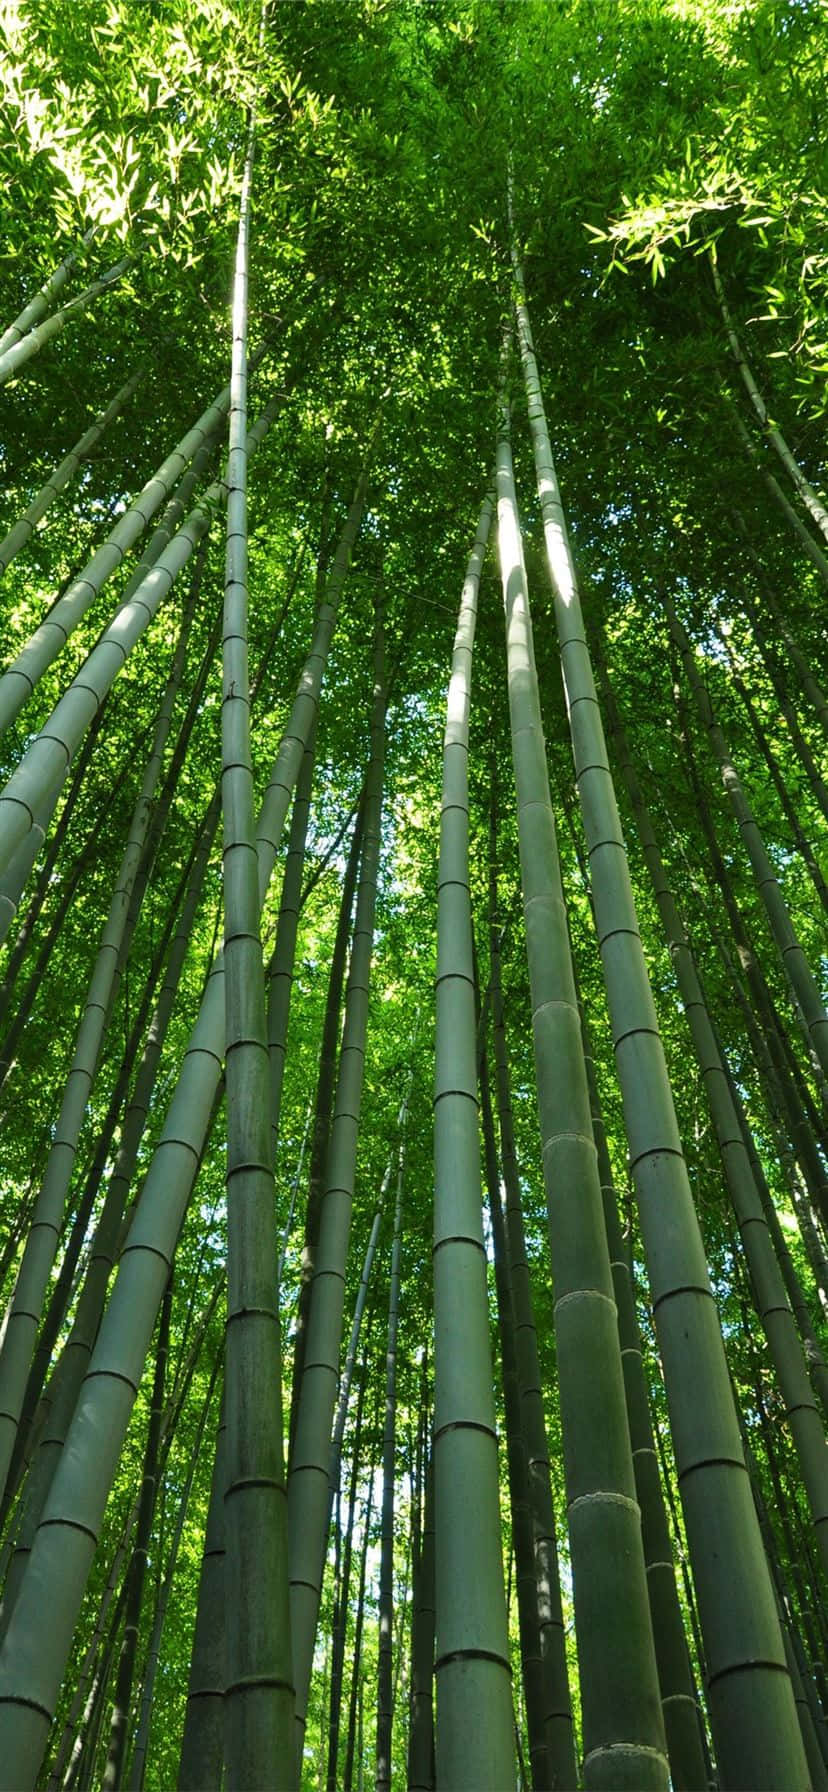 Papelde Parede De Floresta De Bambu - Papel De Parede De Floresta De Bambu Papel de Parede